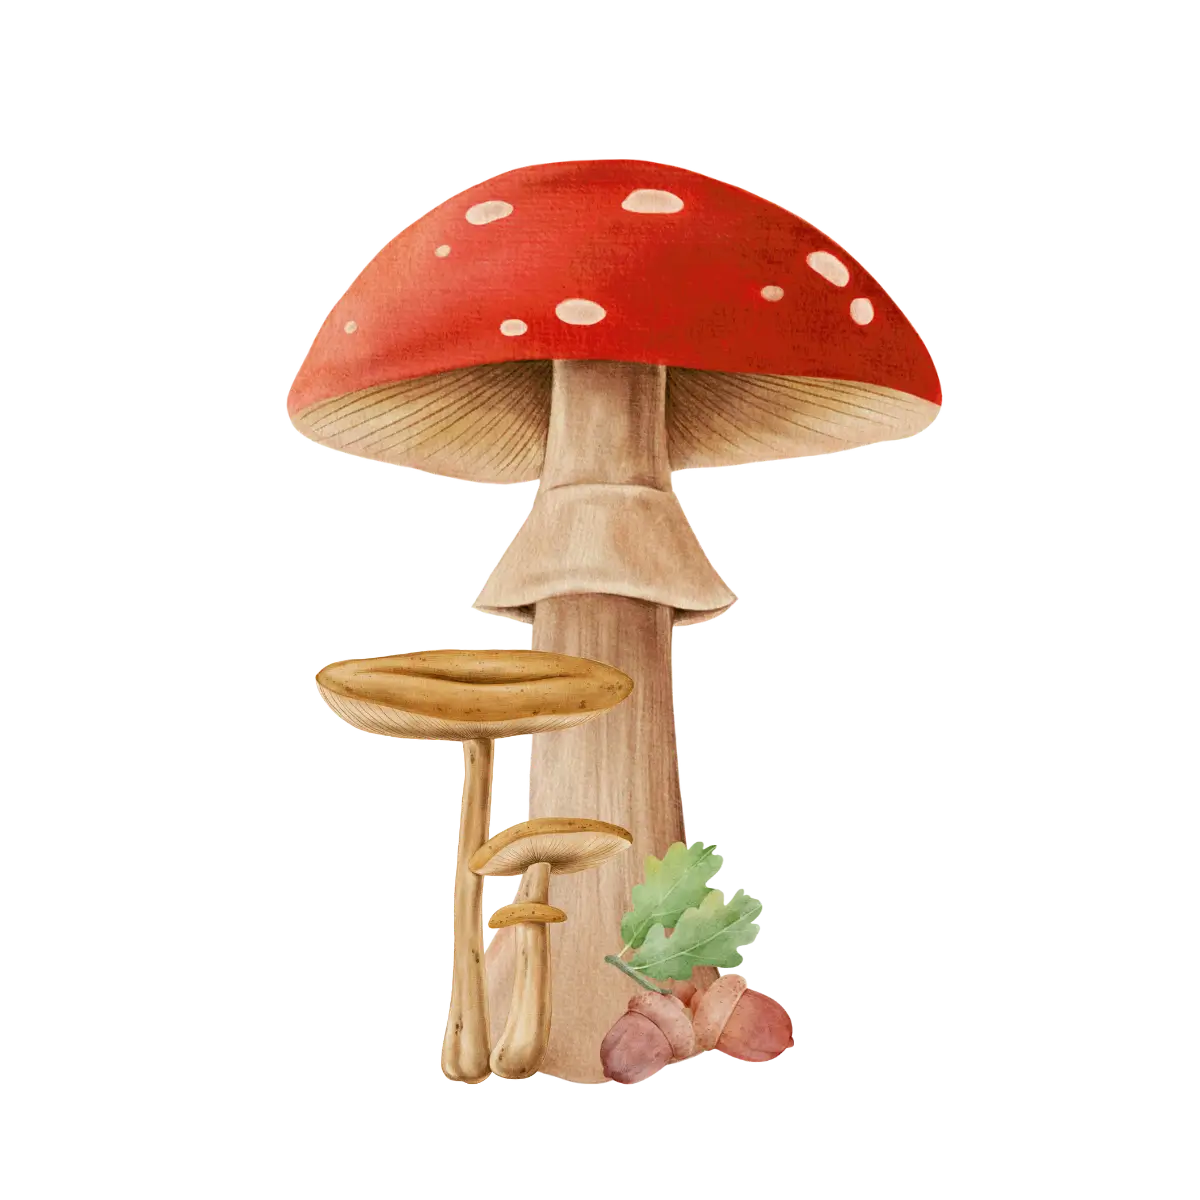 a watercolor image of a mushroom